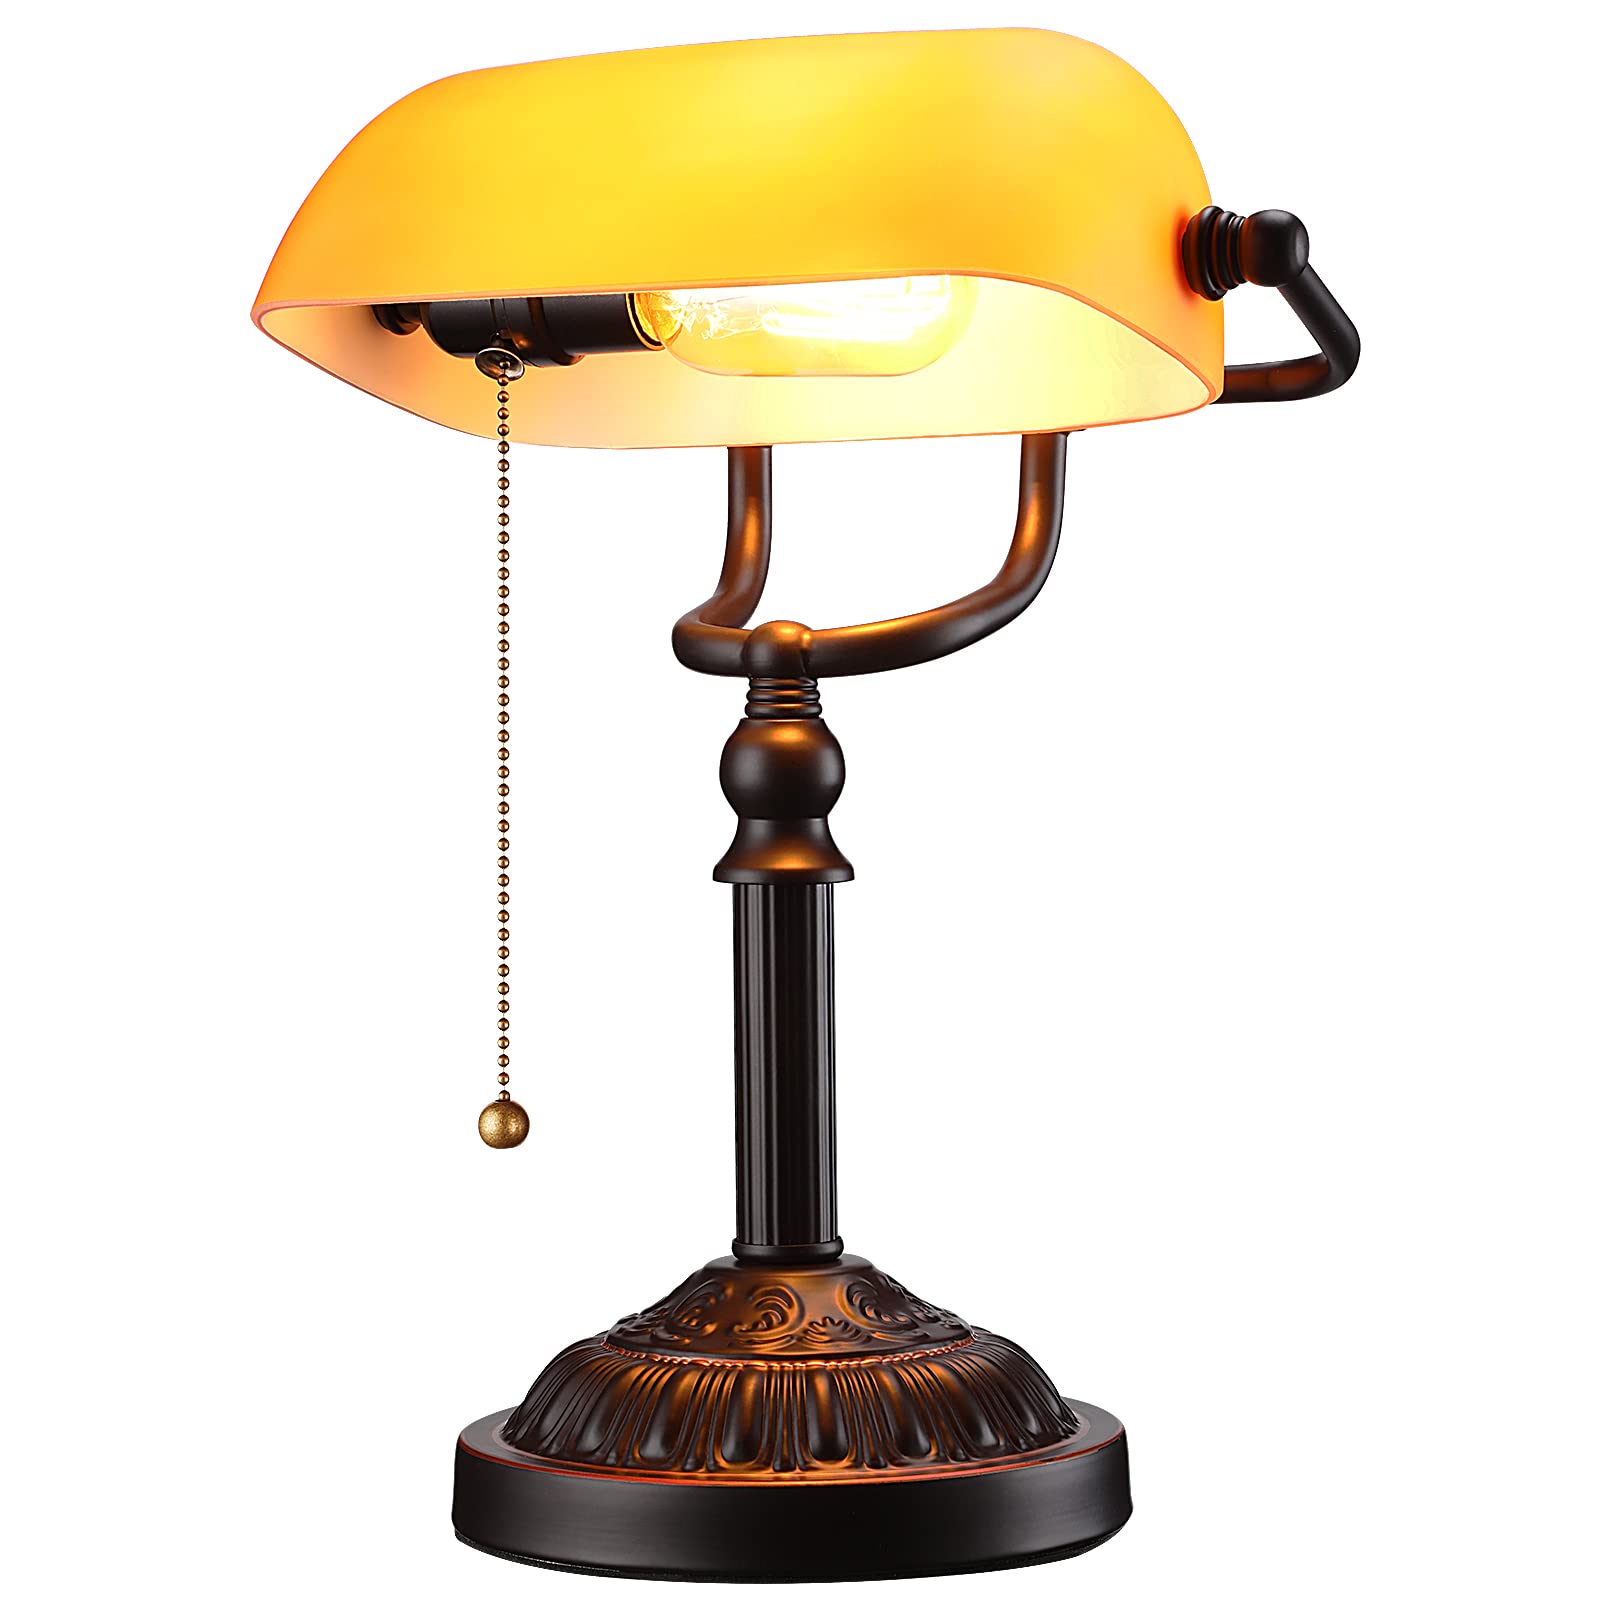 EraEclat Amber Banker's Lamp - E26 Base